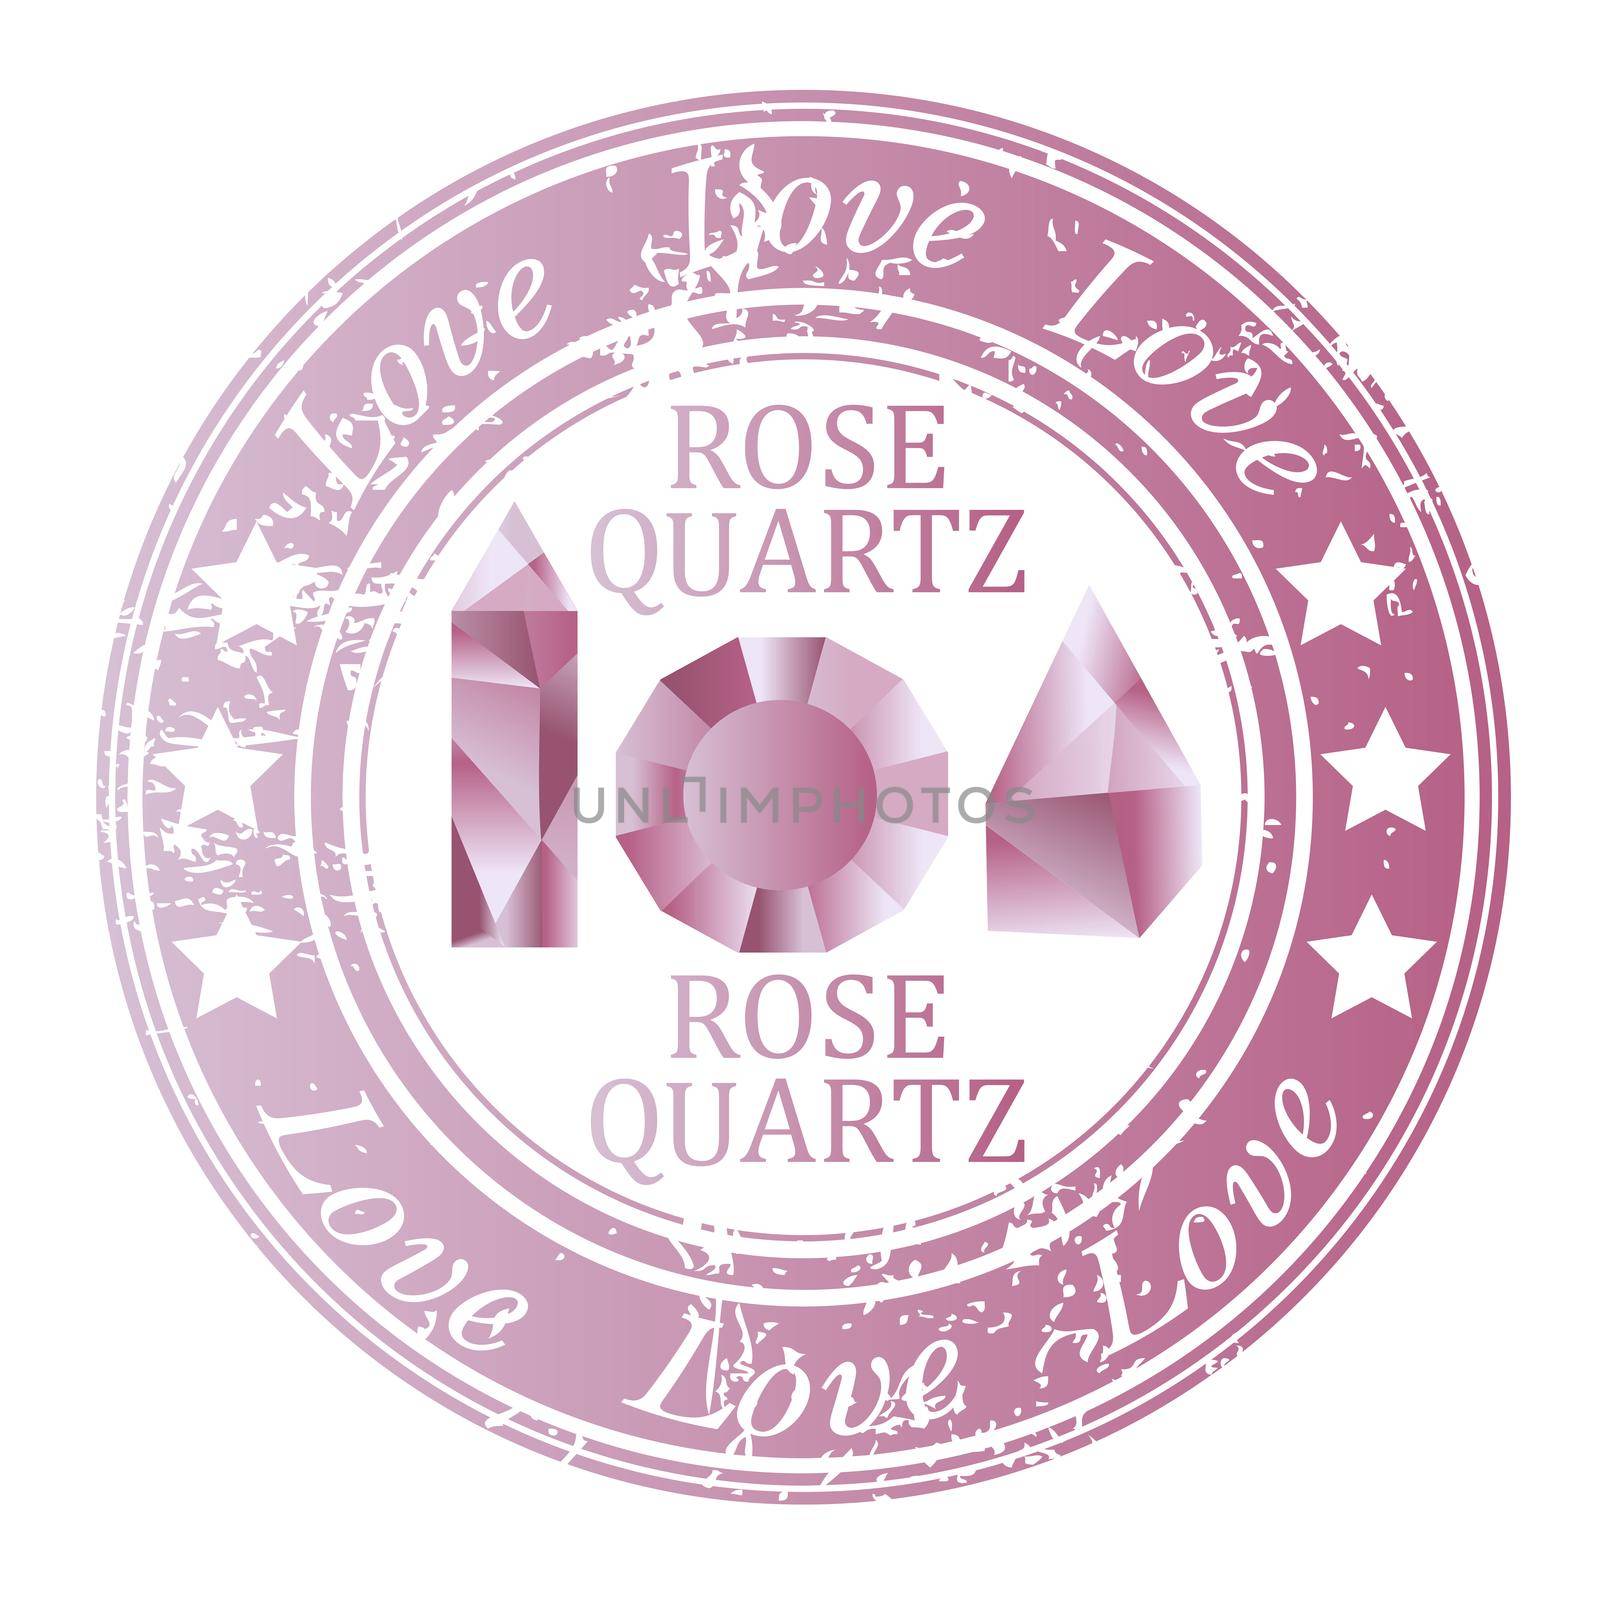 Rubber stamp with rose quartz gems and rose quartz benefit by hibrida13